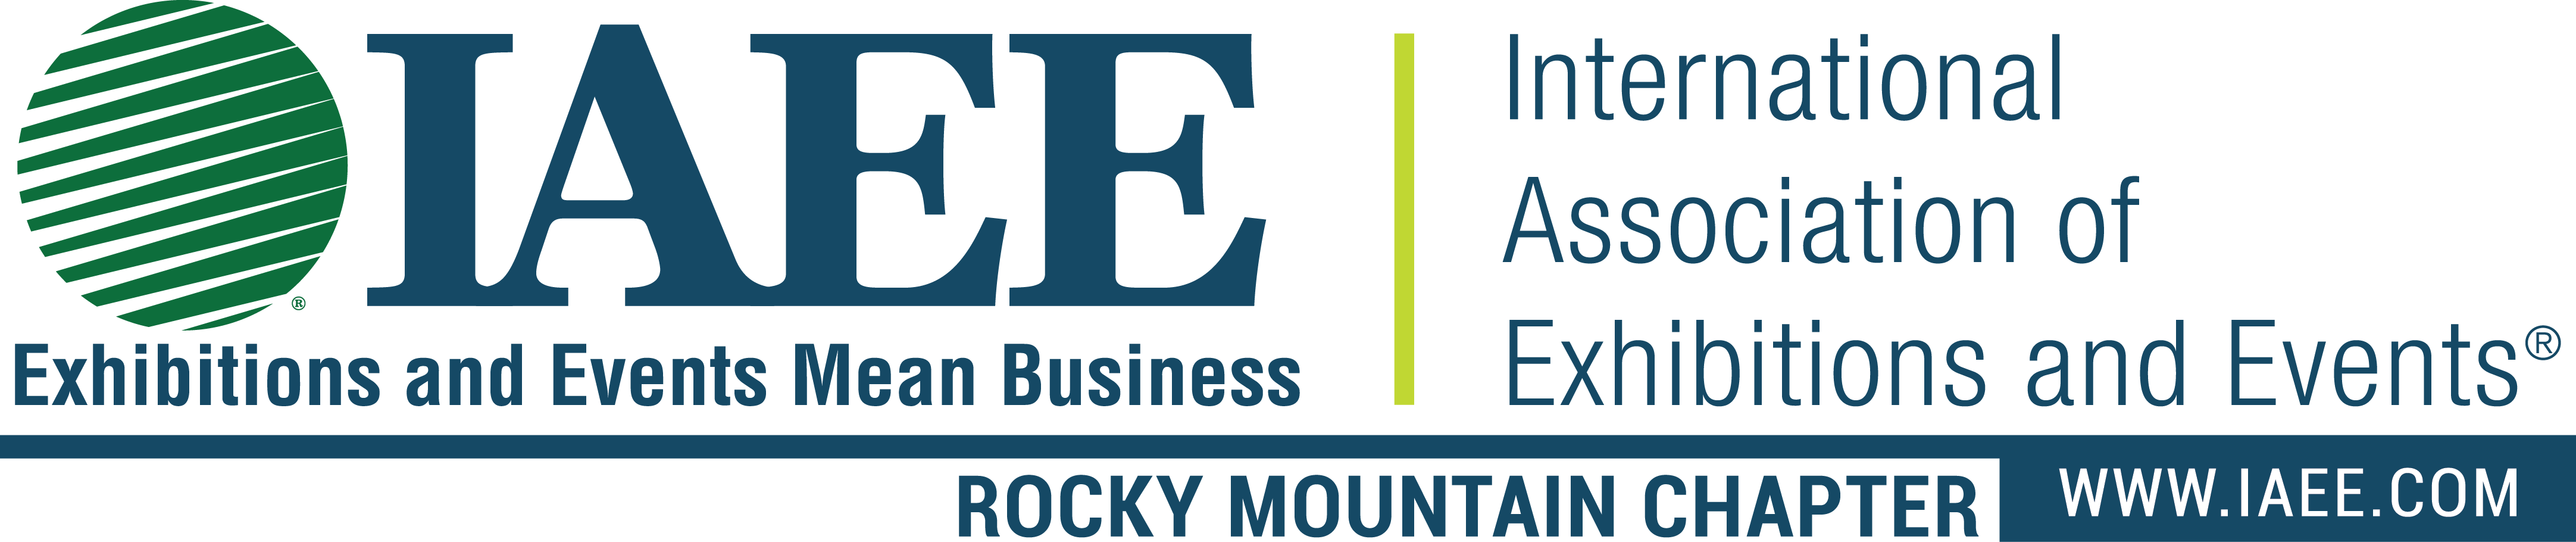 IAEE-Rocky Mountain Chapter